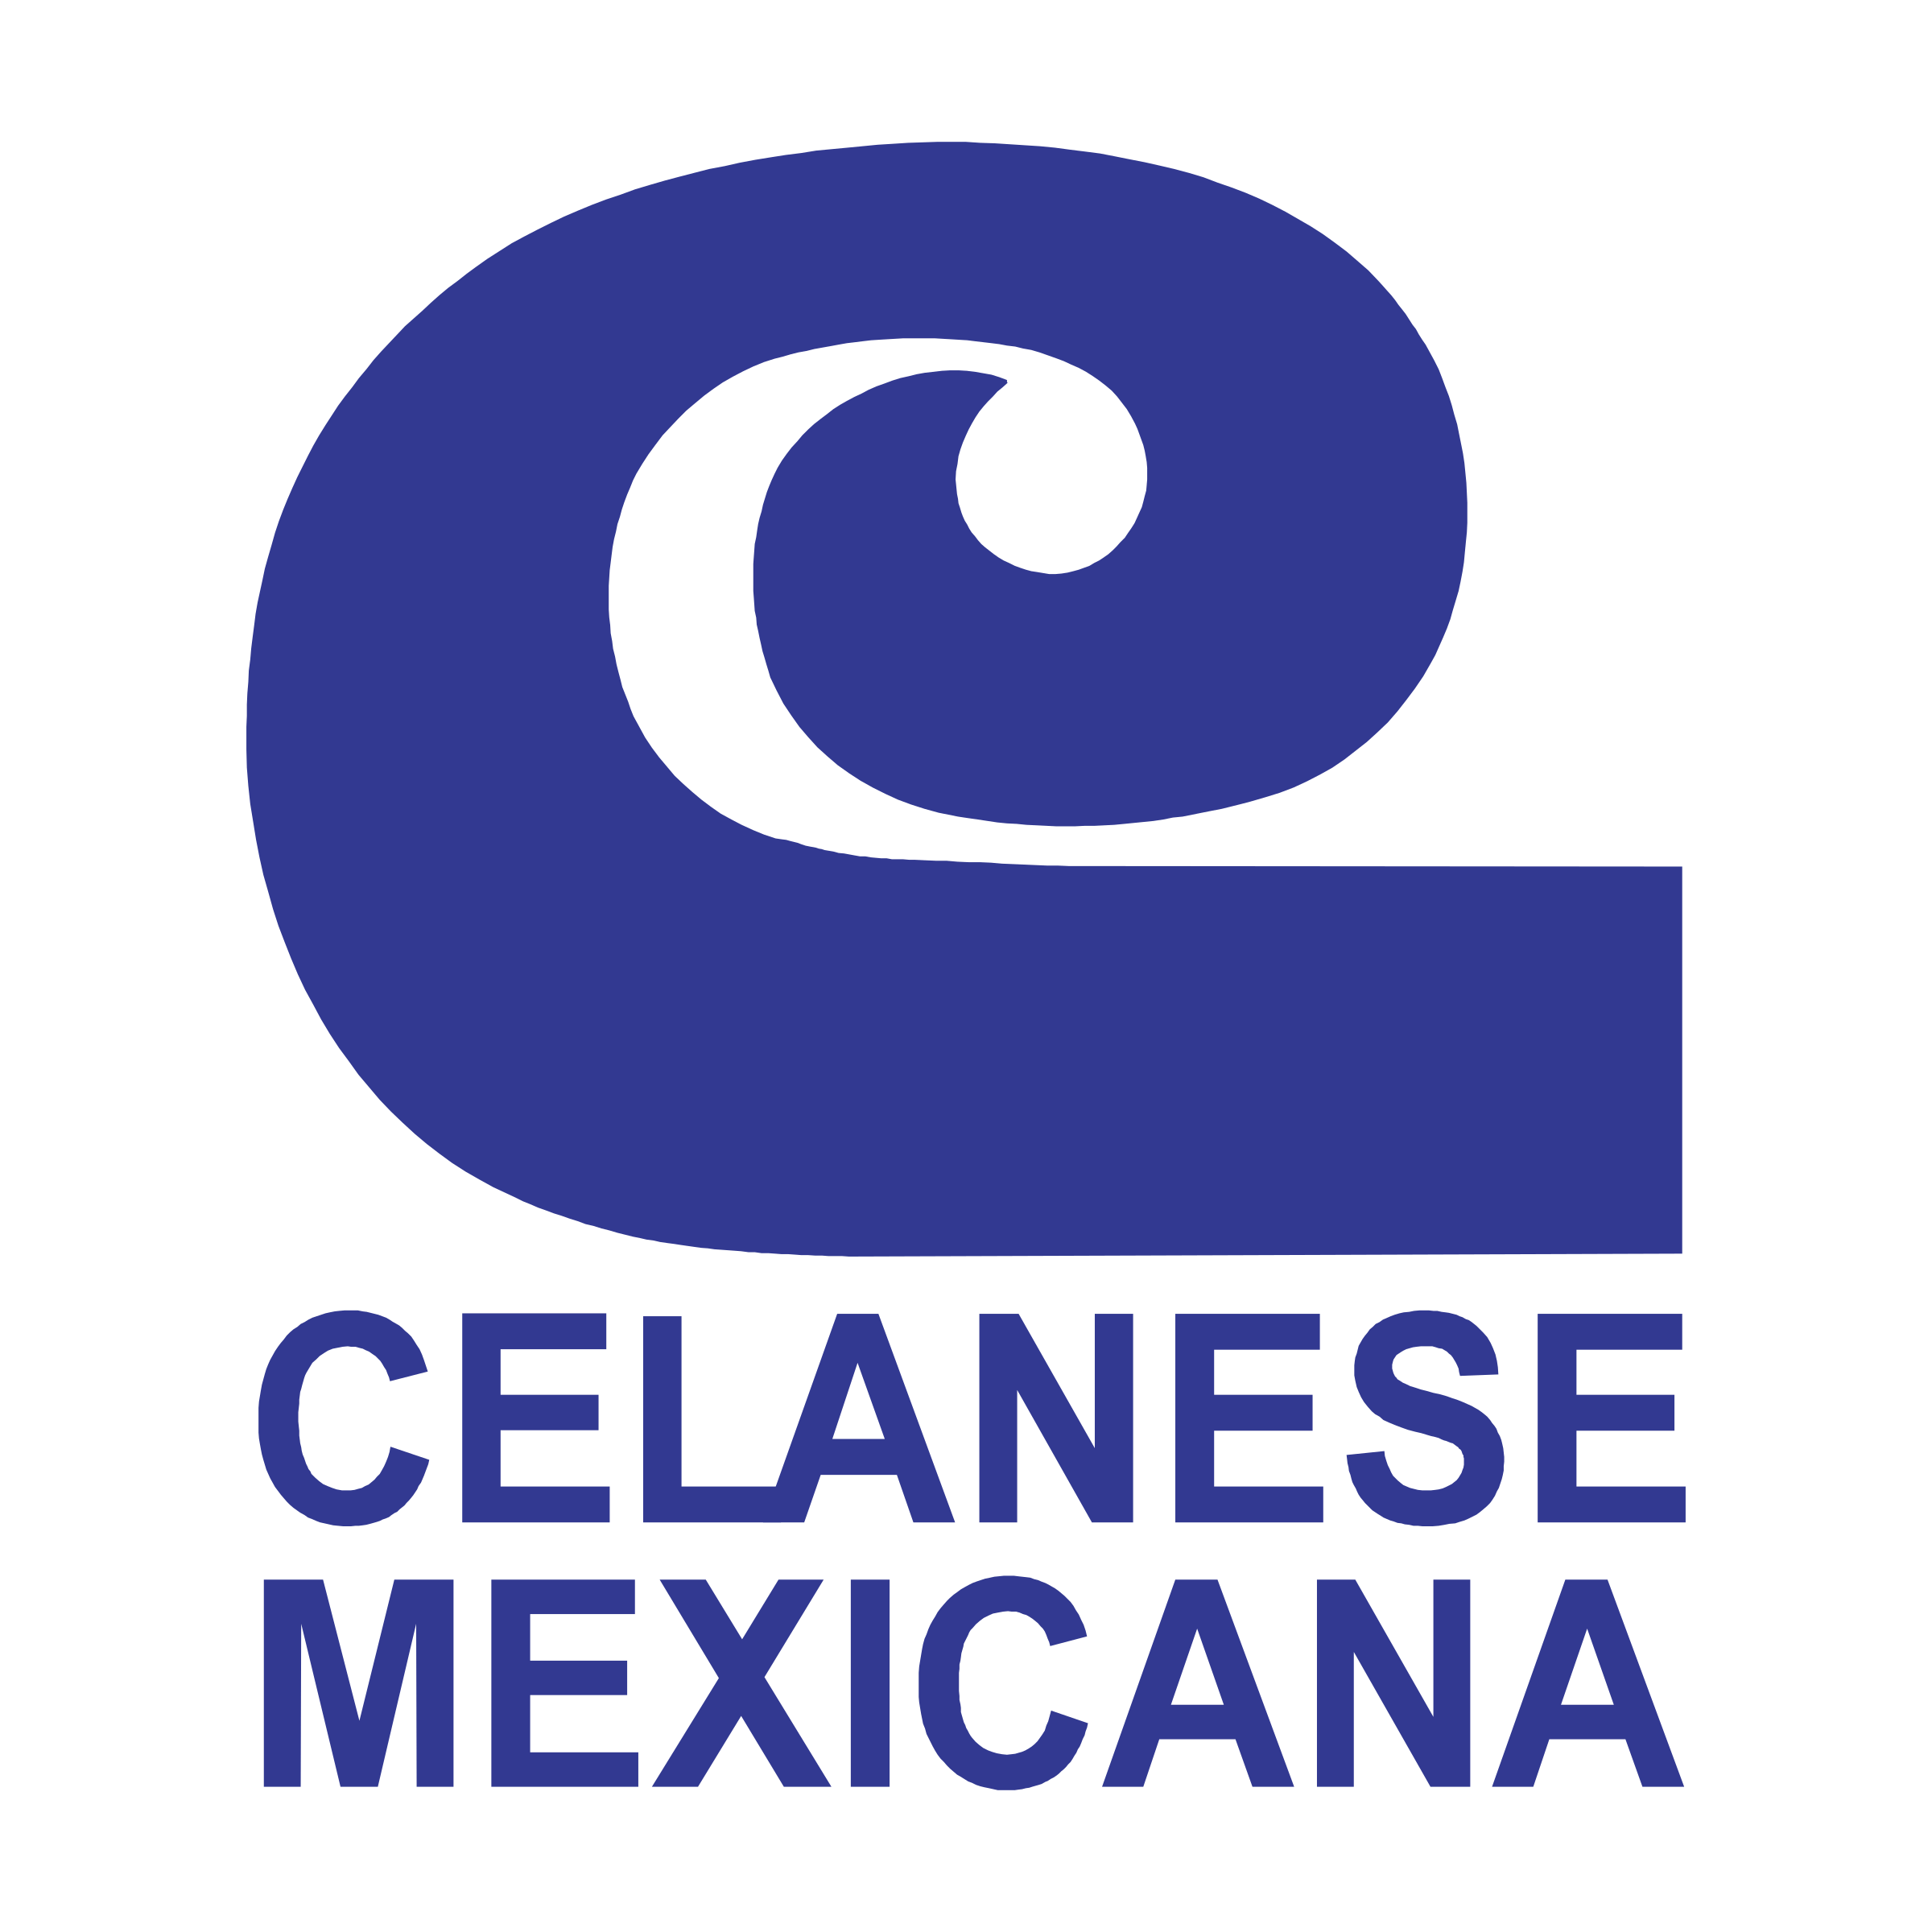 Celanese Logo - Celanese Mexicana Logo PNG Transparent & SVG Vector - Freebie Supply